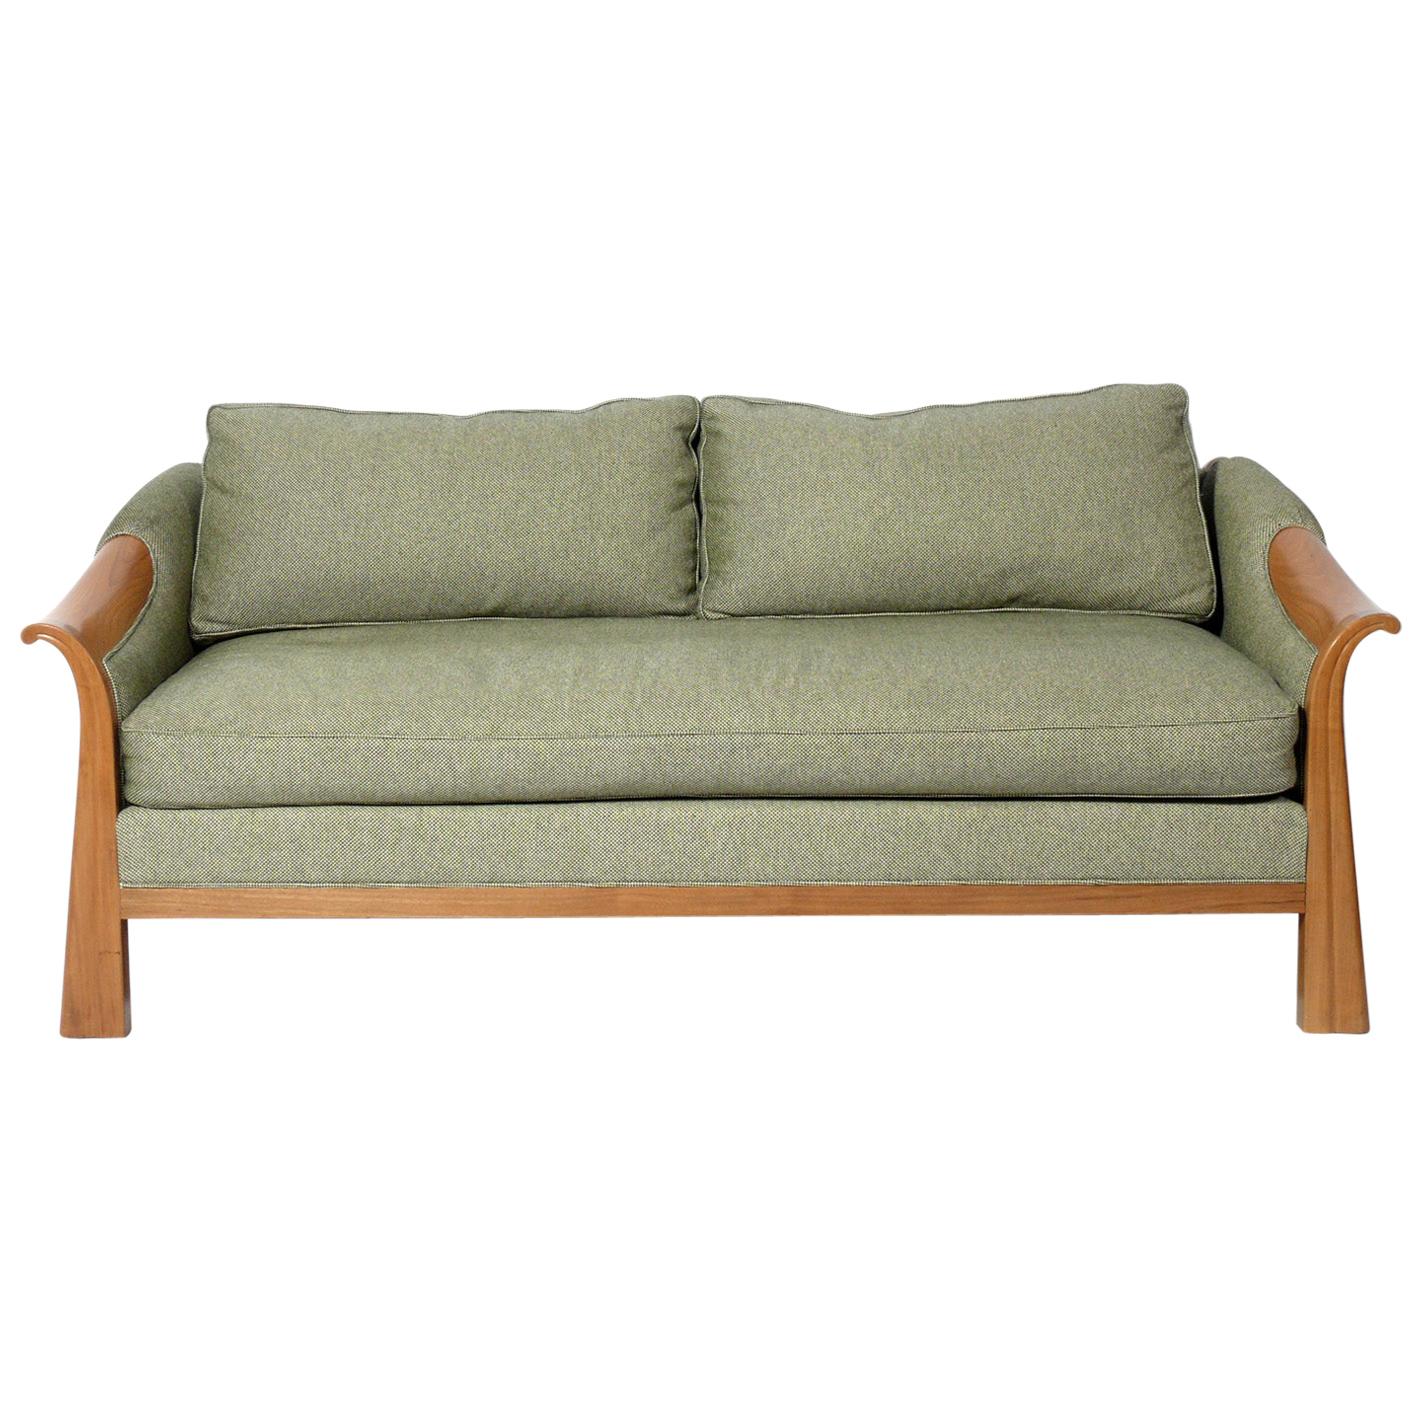 Pierre Chareau Style Sofa